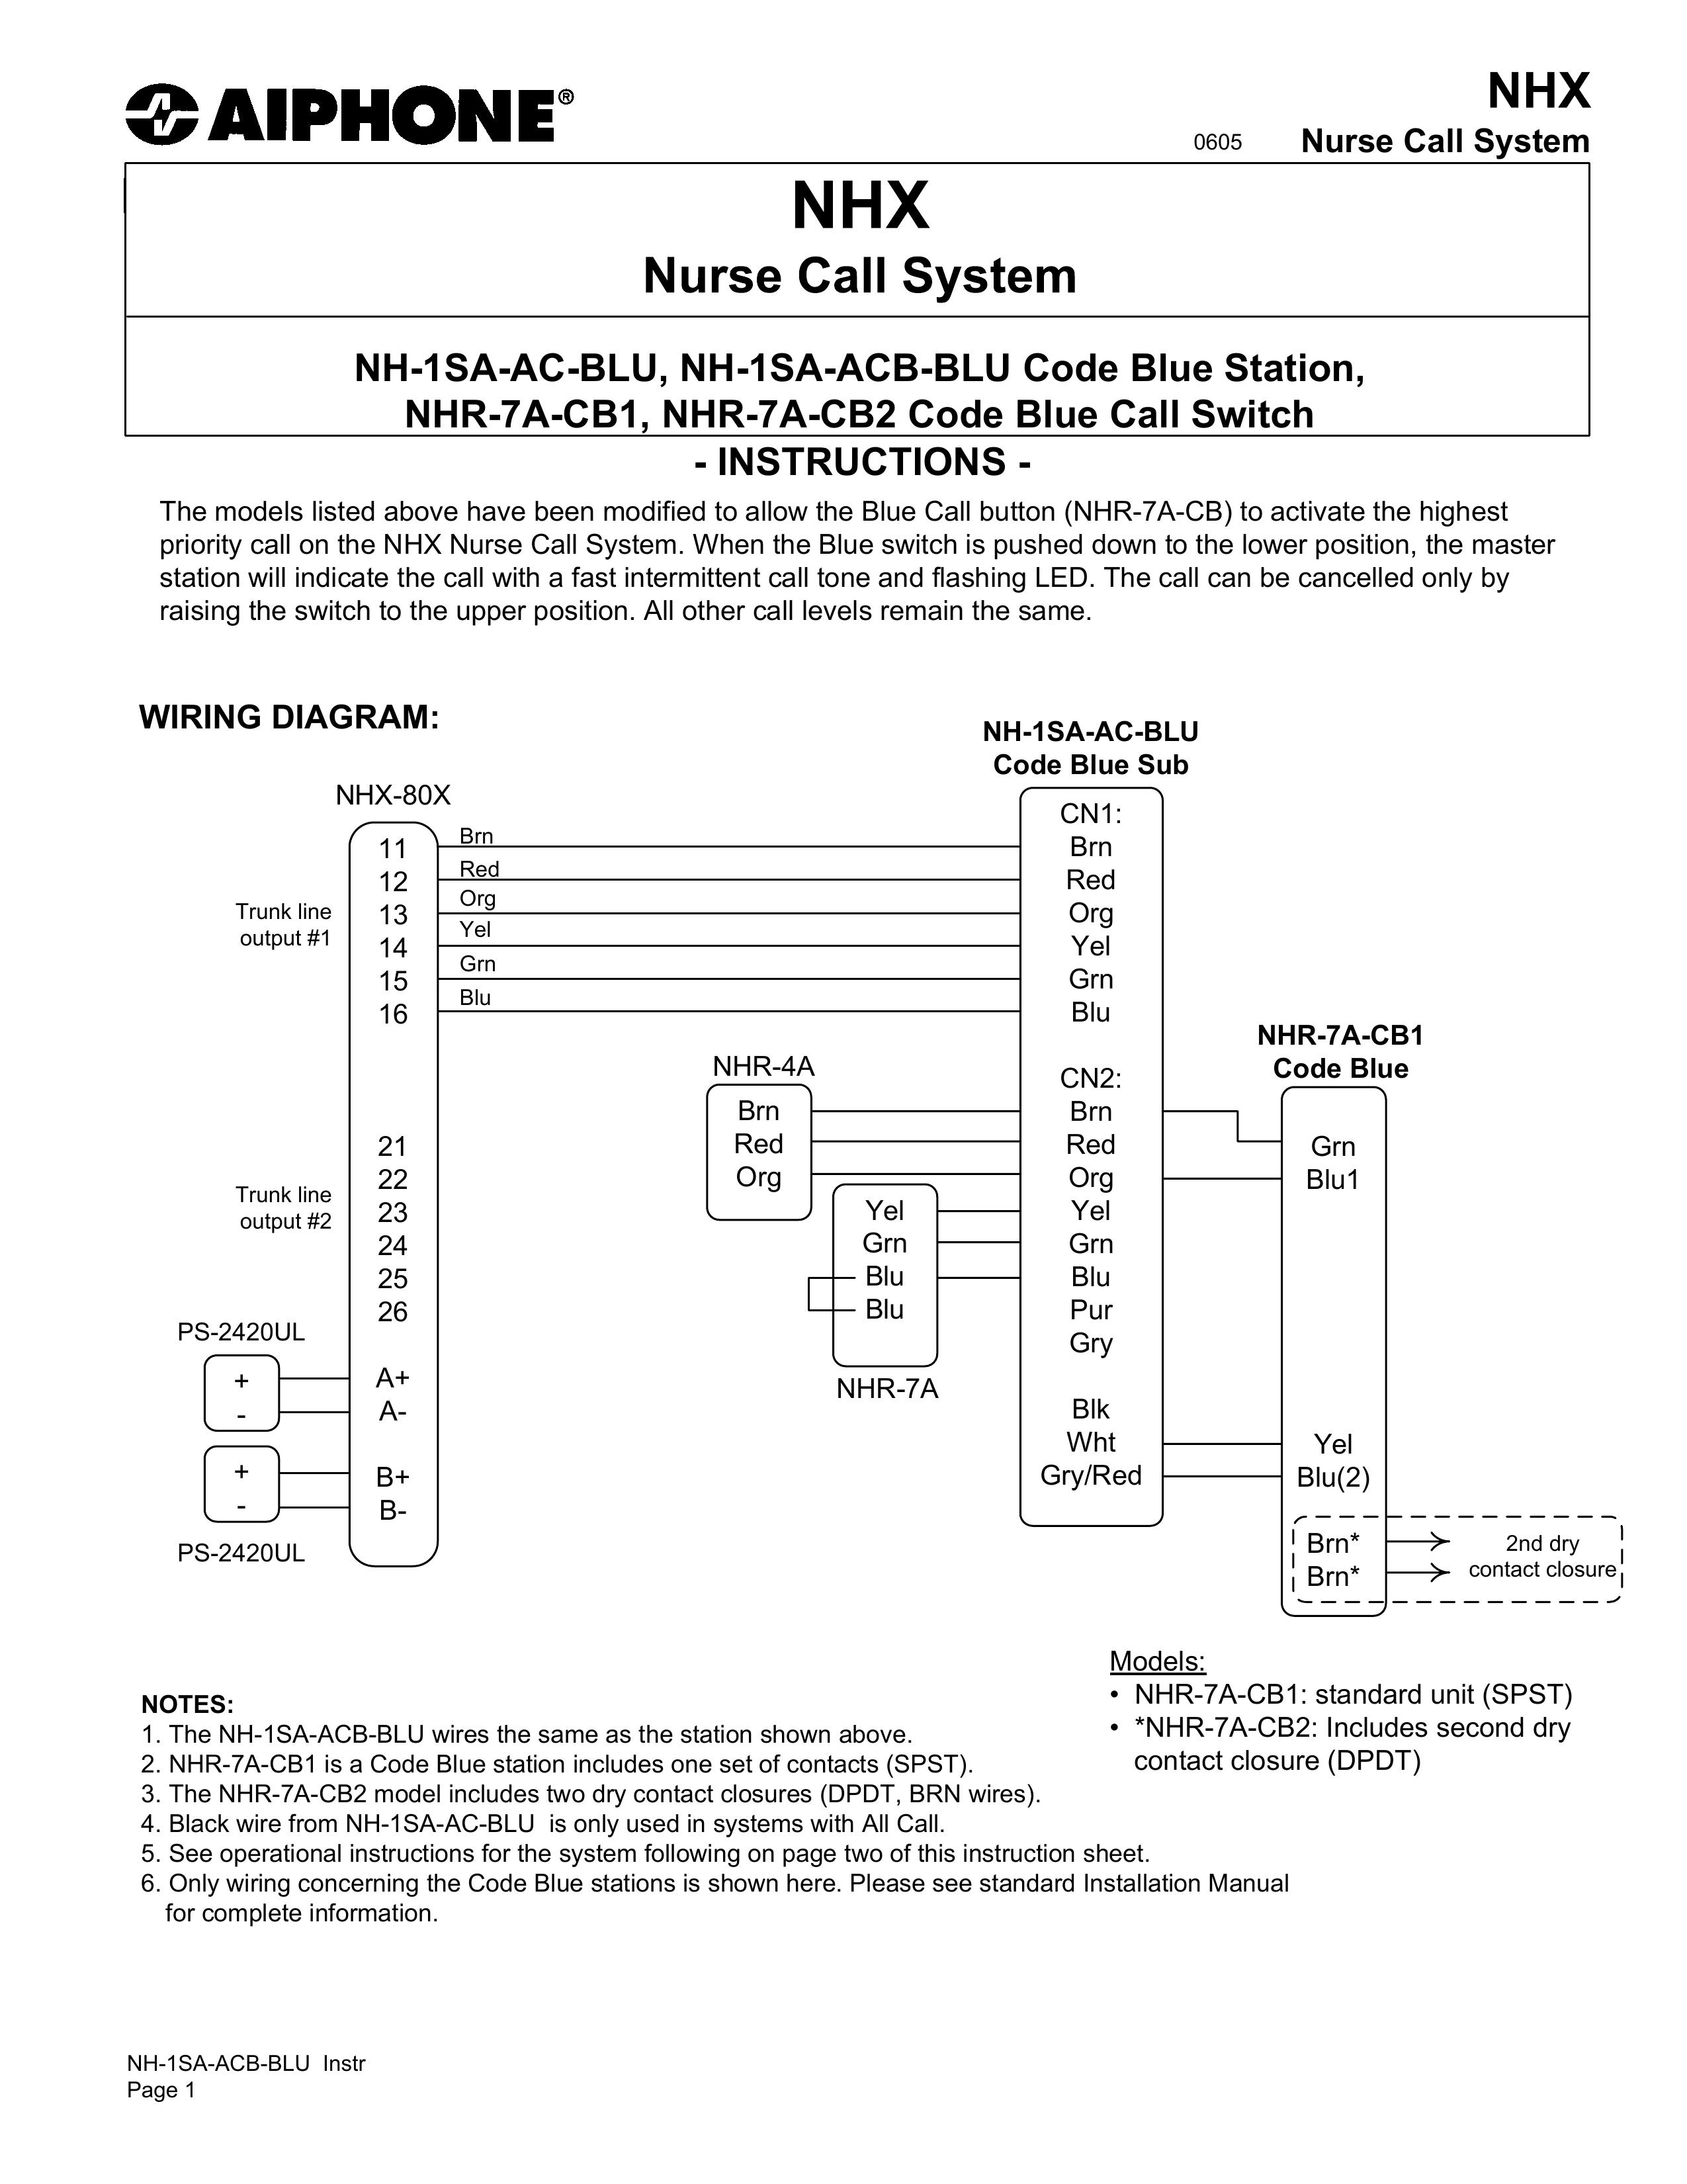 Aiphone NH-1SA-ACB-BLU Medical Alarms User Manual